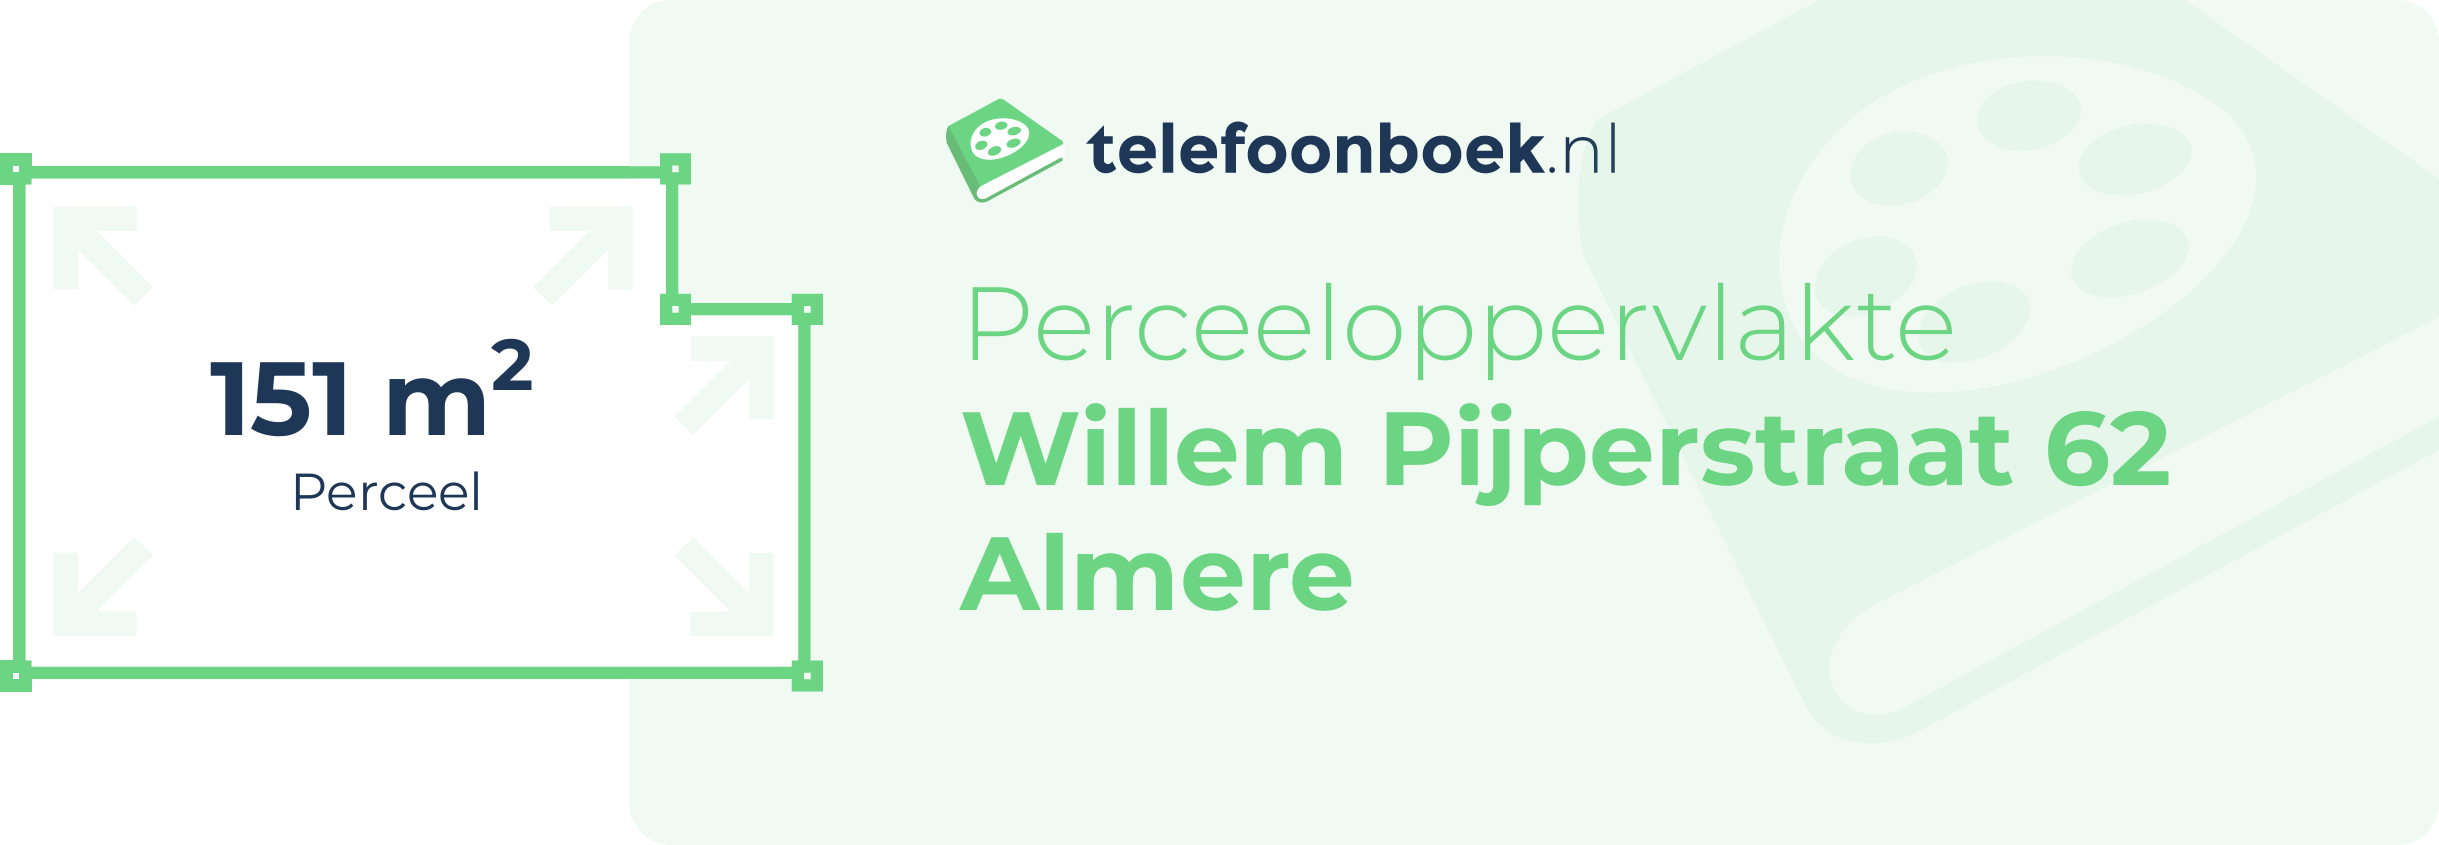 Perceeloppervlakte Willem Pijperstraat 62 Almere